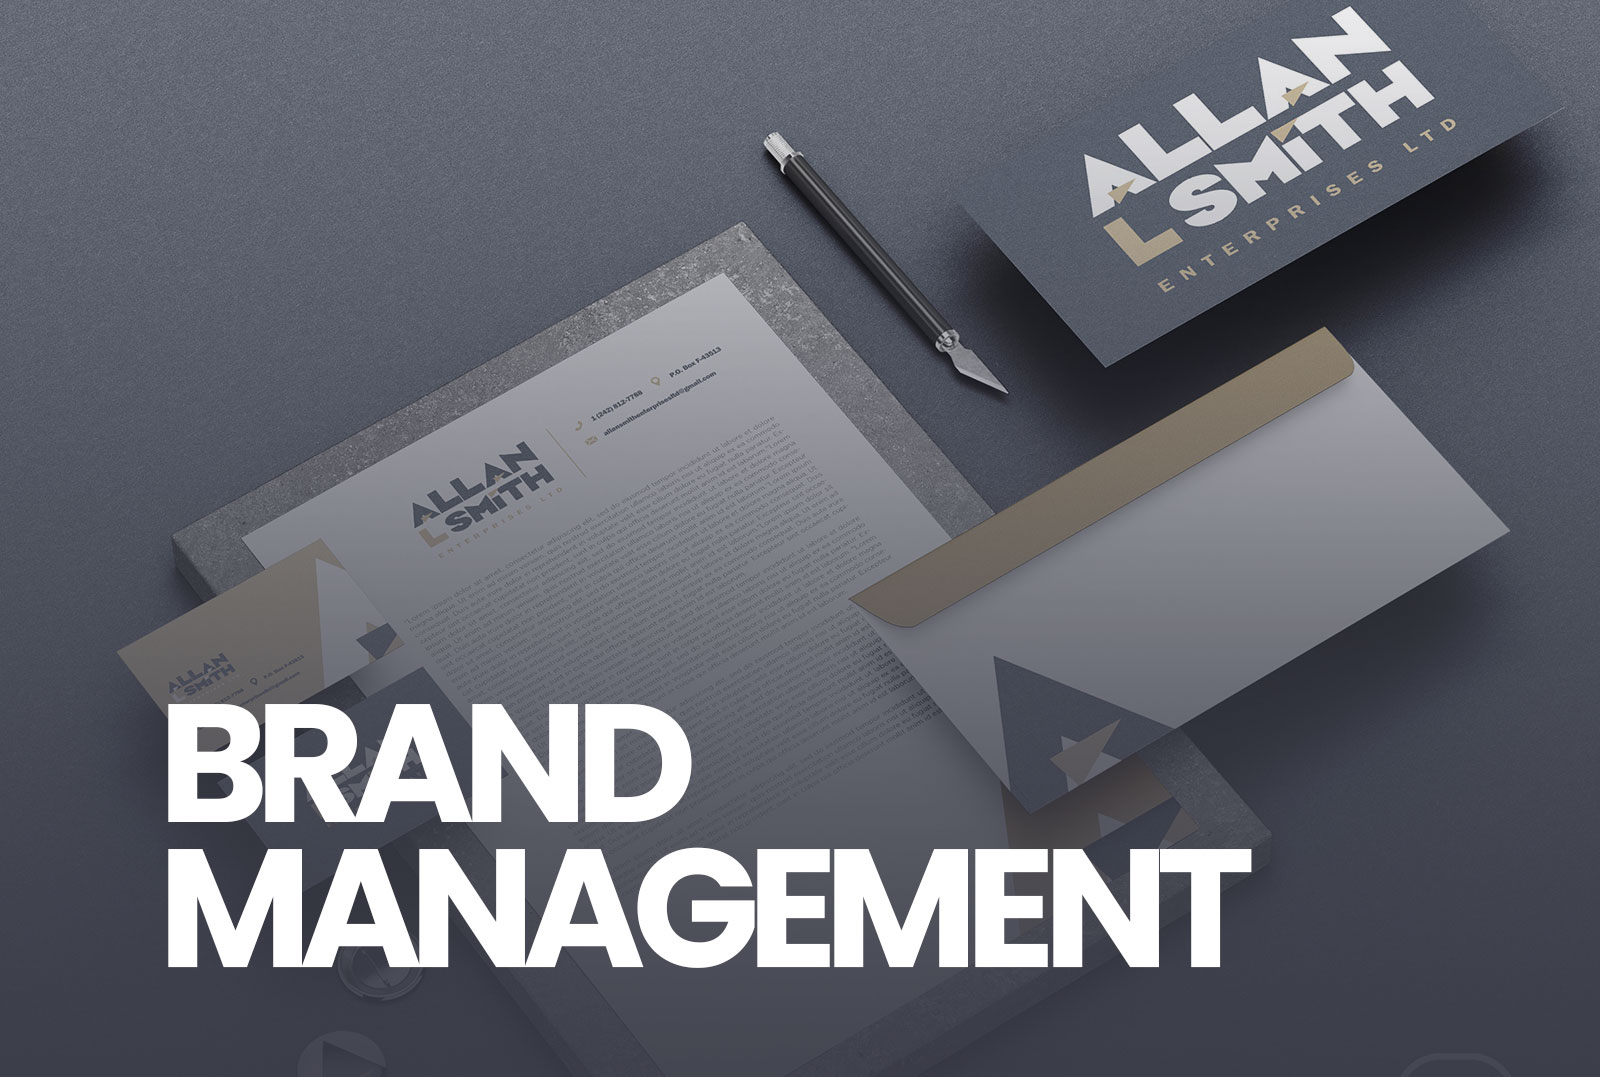 Brand Management Logo Design The Bahamian Studio Graphic Design Flyers Logos Printing Marketing Nassau Bahamas